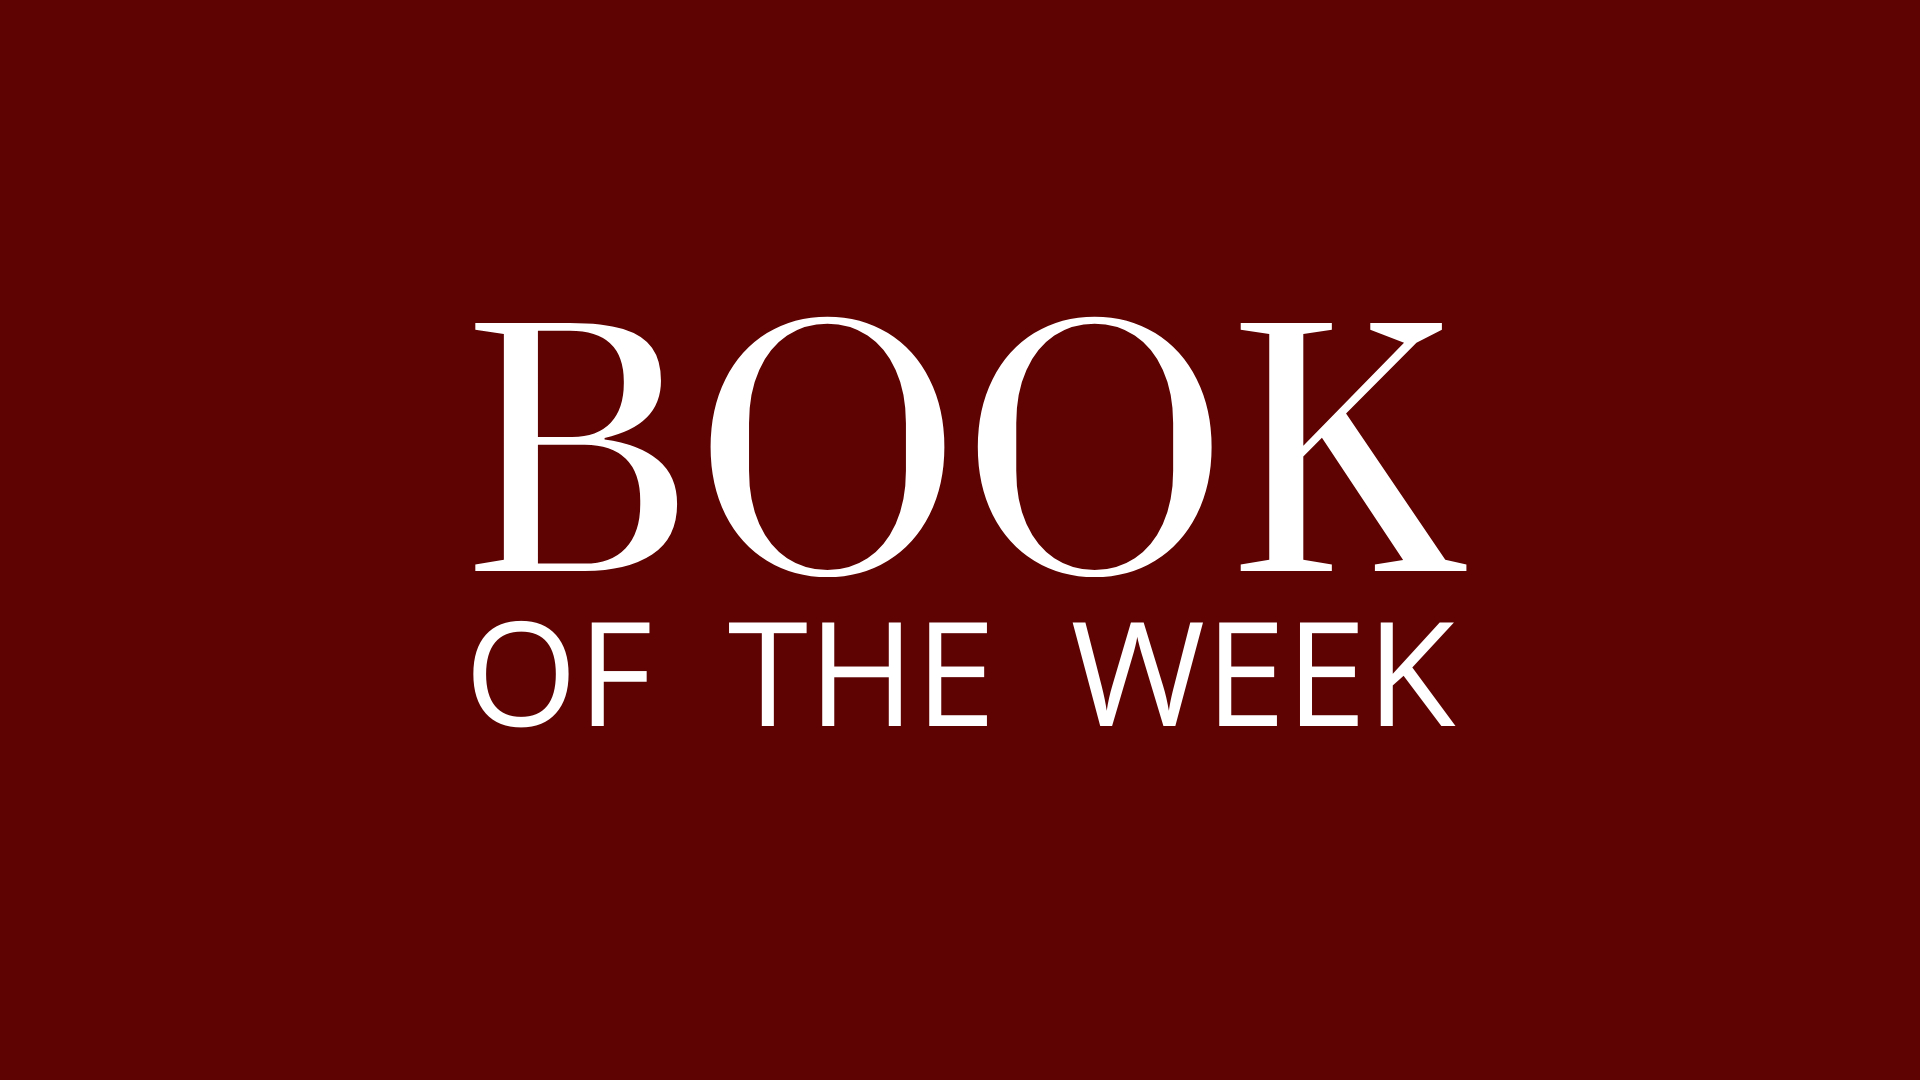 Book of the Week: The 4-Hour Workweek